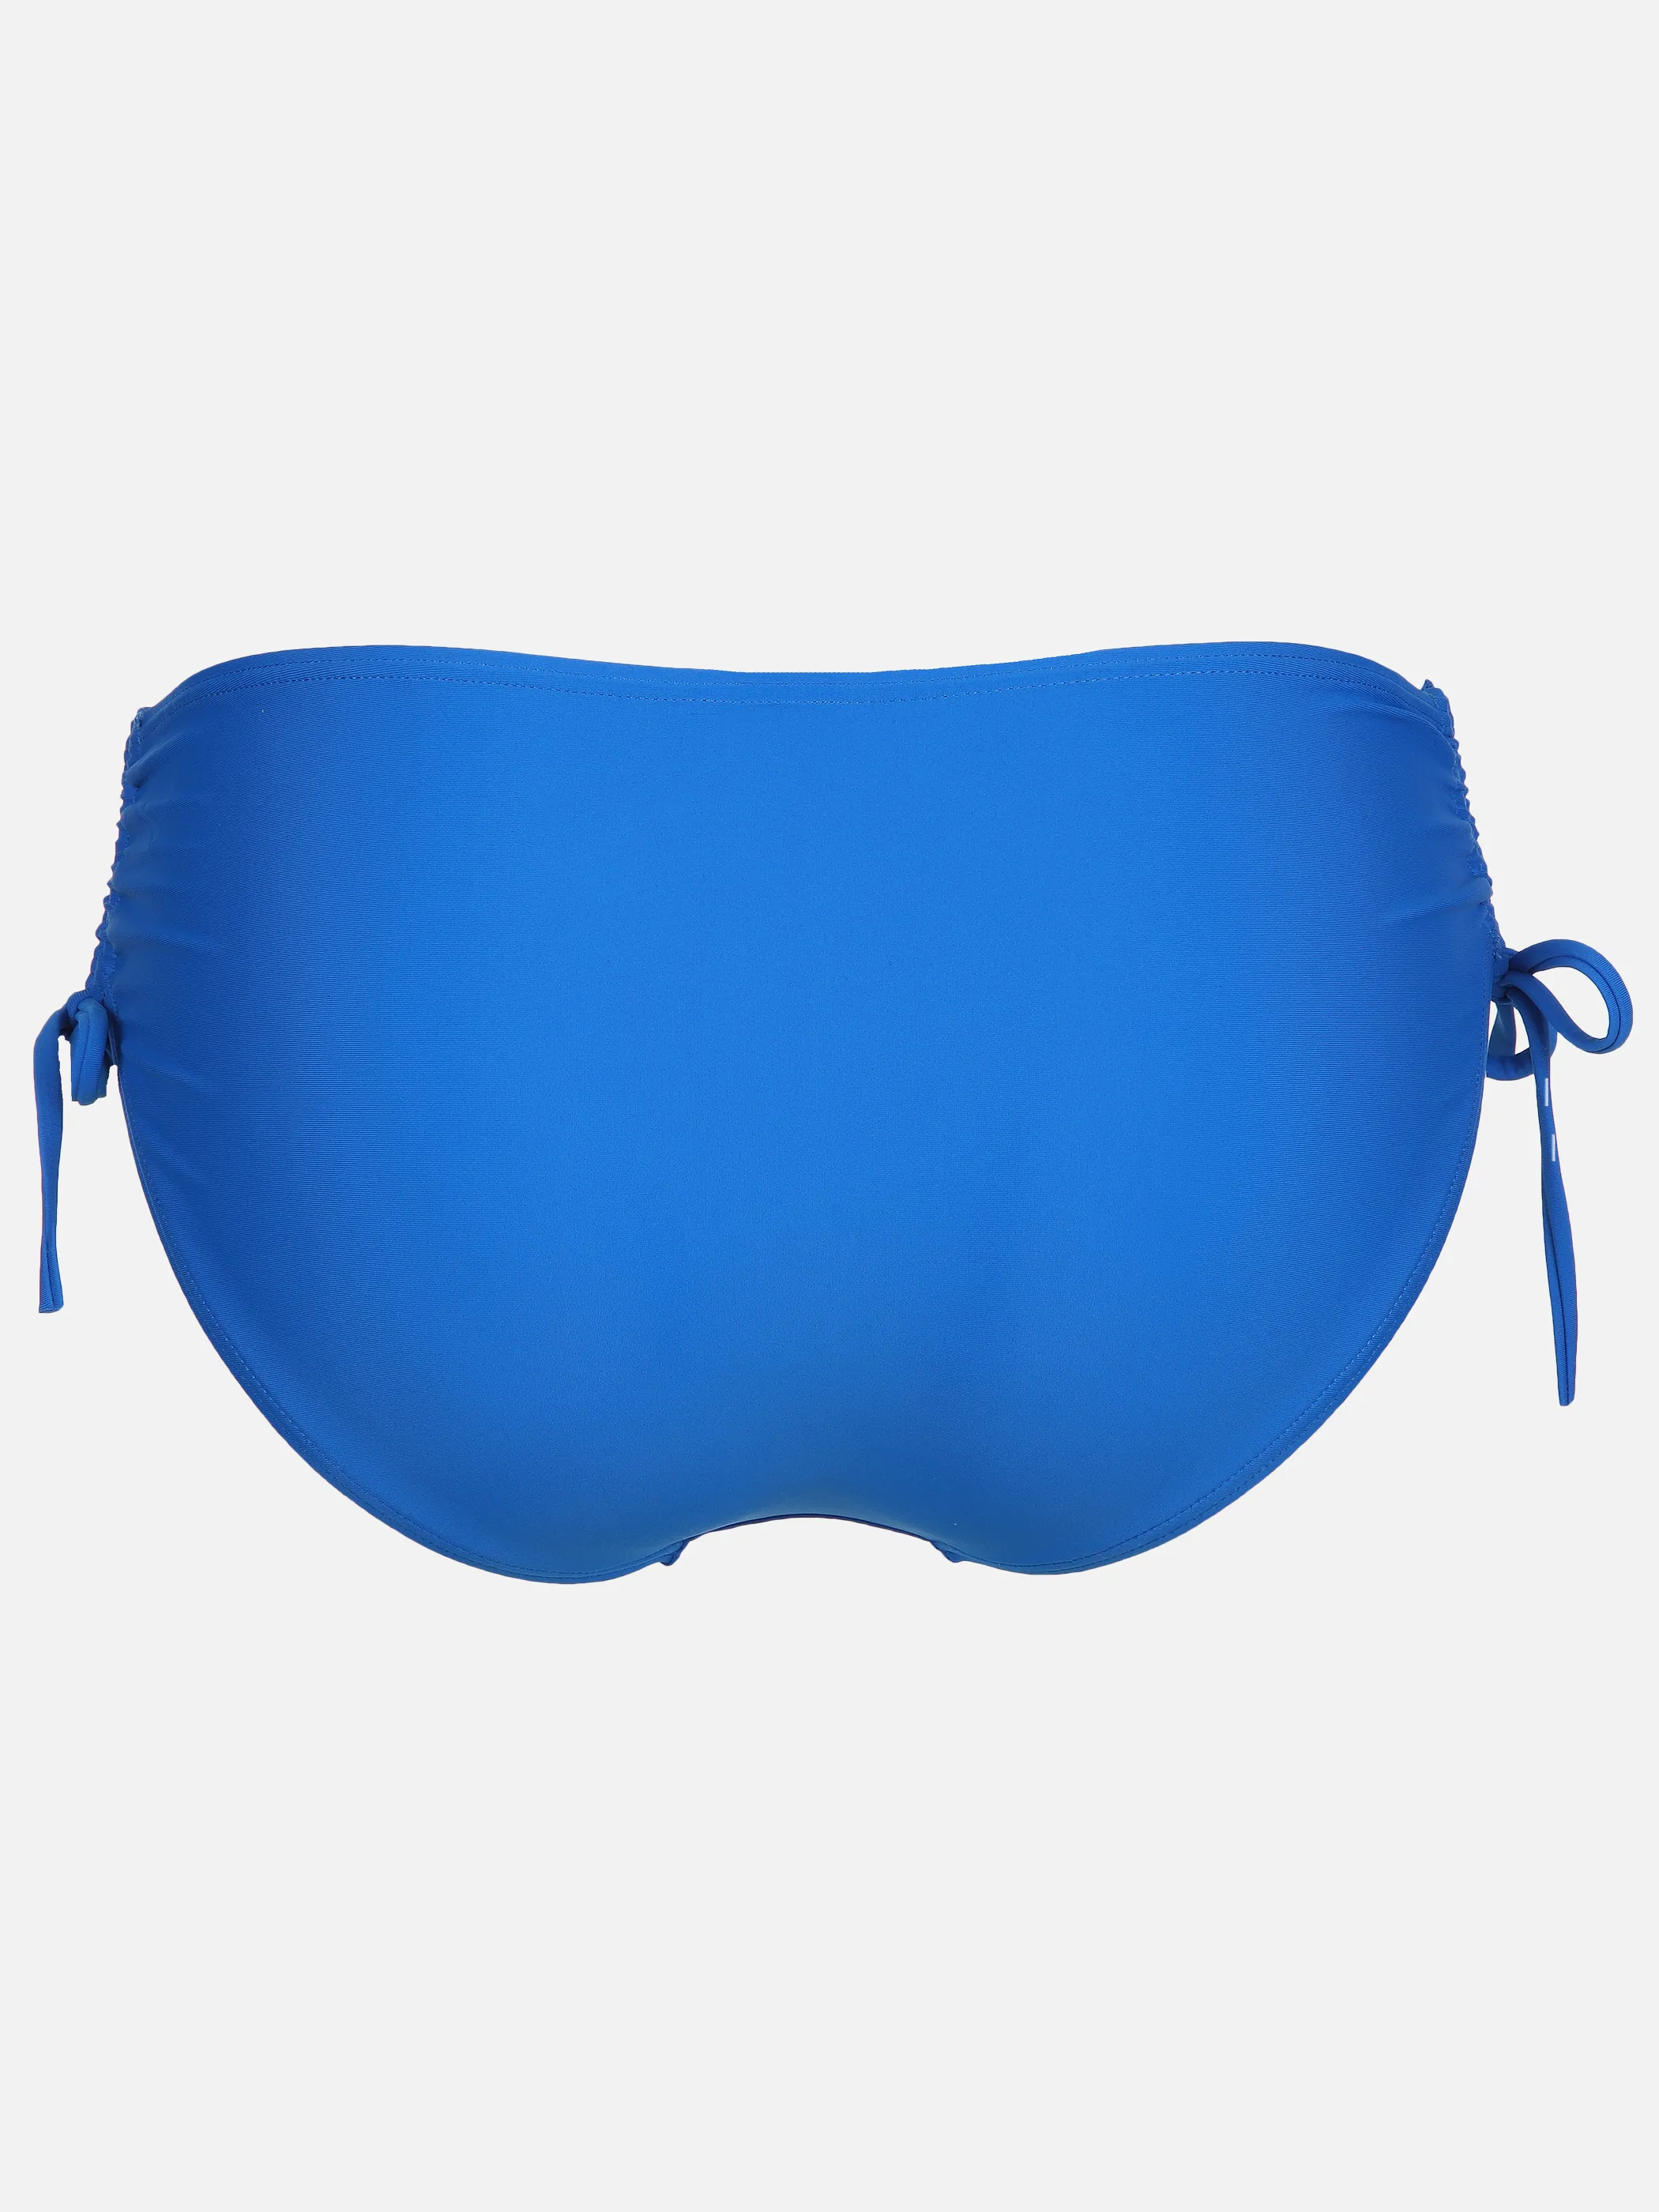 Grinario Sports Da-Bikini Hose uni Blau 890130 ROYAL BLUE 2